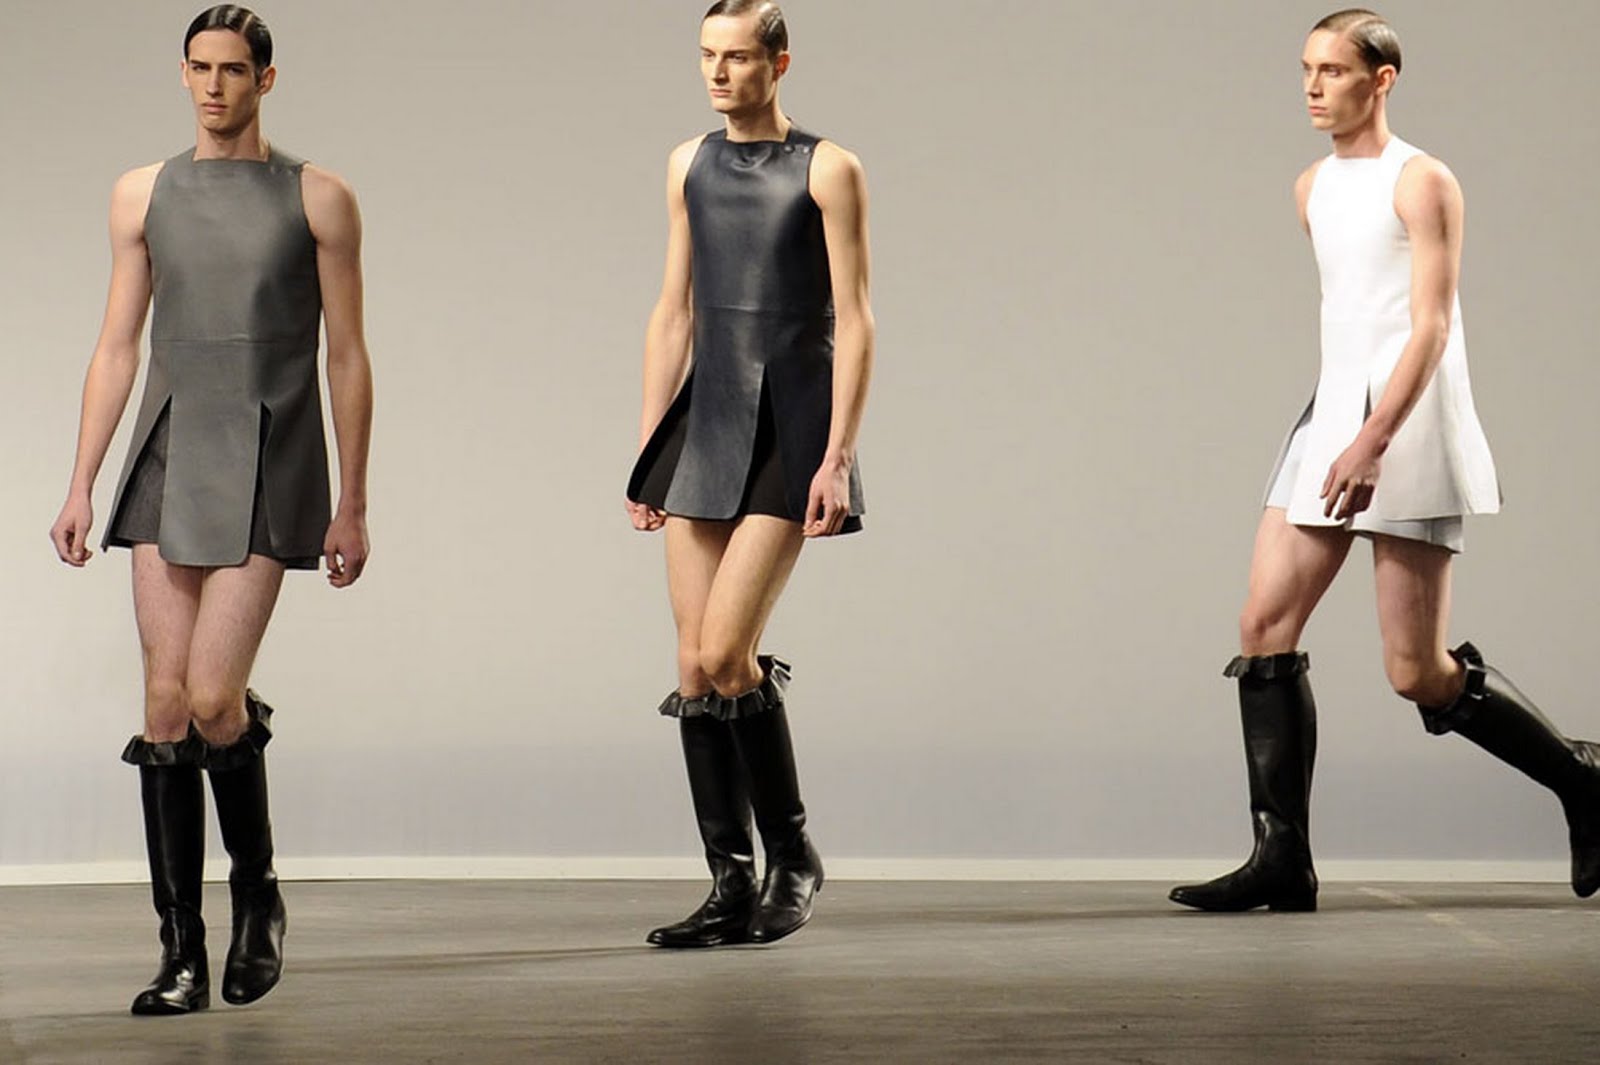 Men’s fashion is becoming more progressive and inclusive (feminine). 